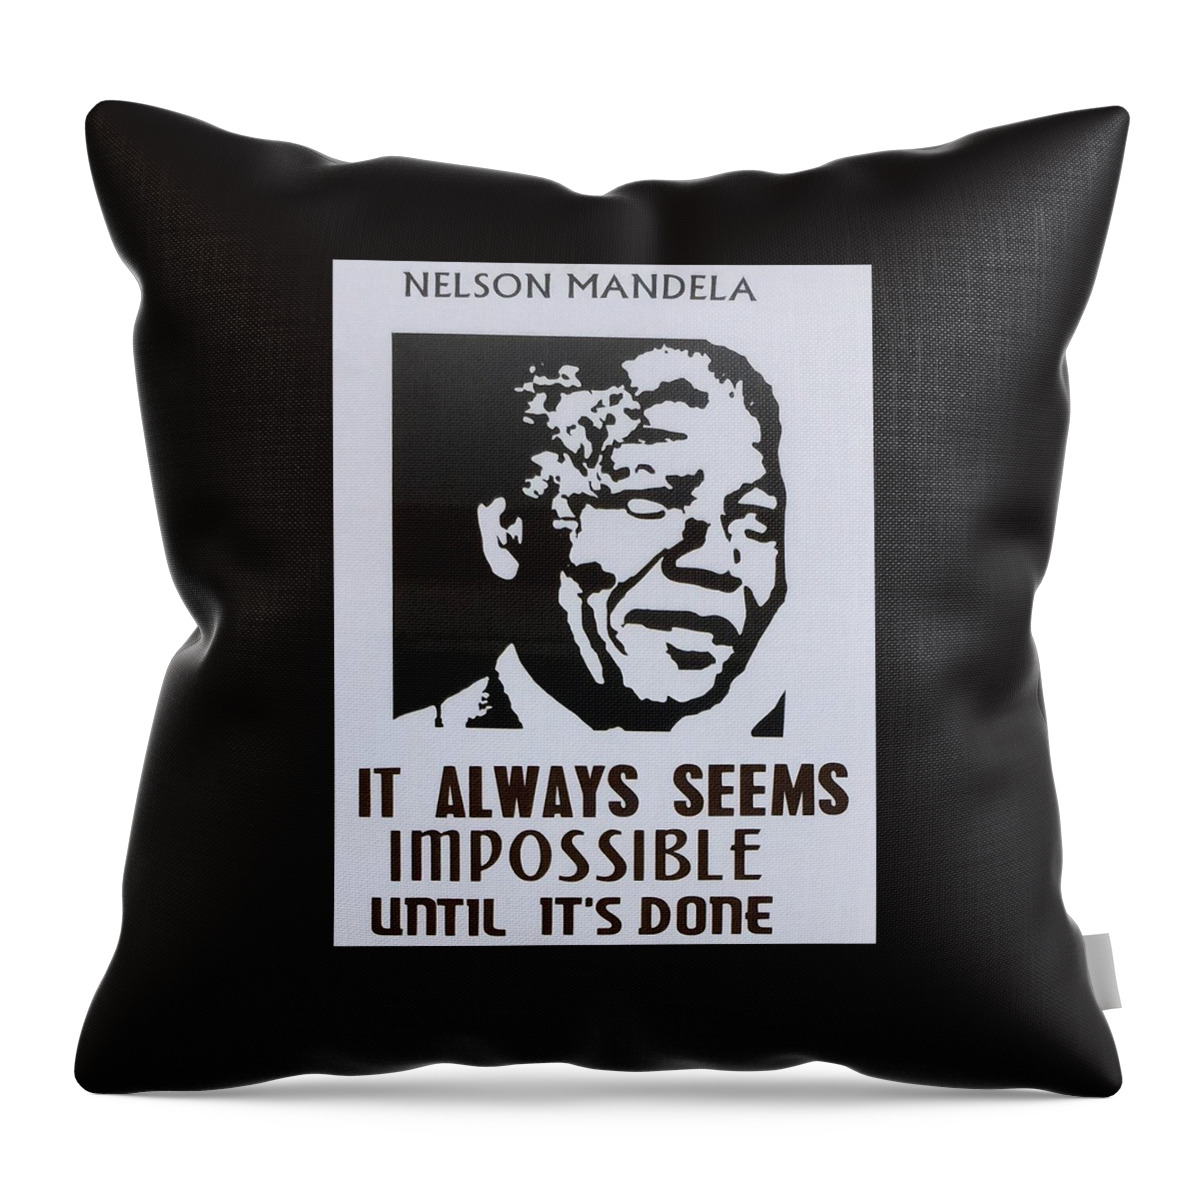 Art Throw Pillow featuring the mixed media Nelson Mandela by Ryszard Ludynia